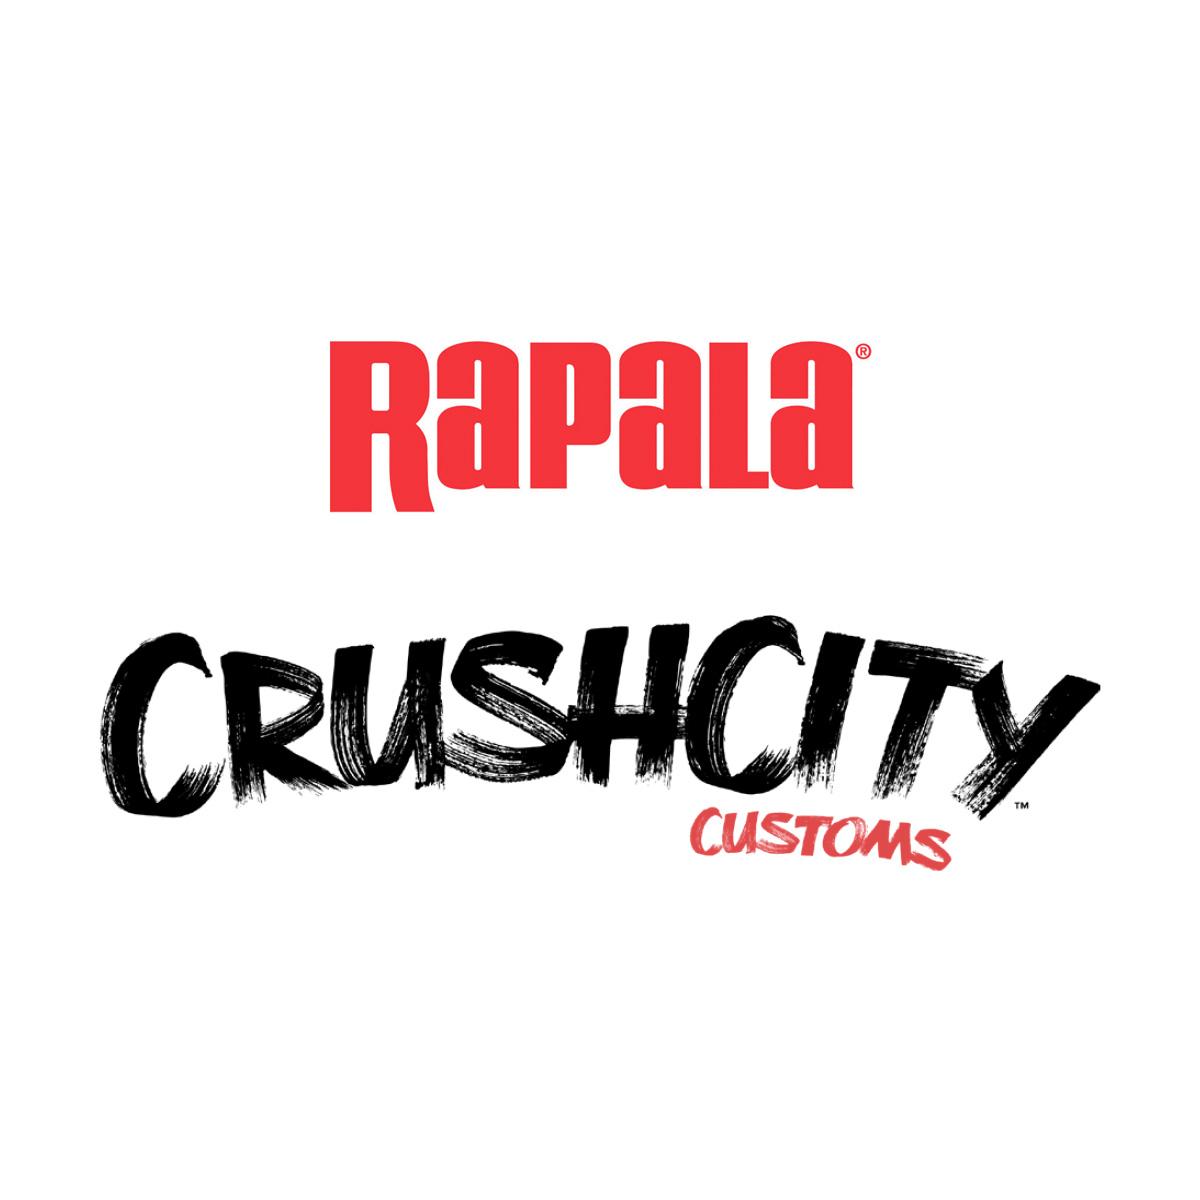 Rapala CrushCity Customs